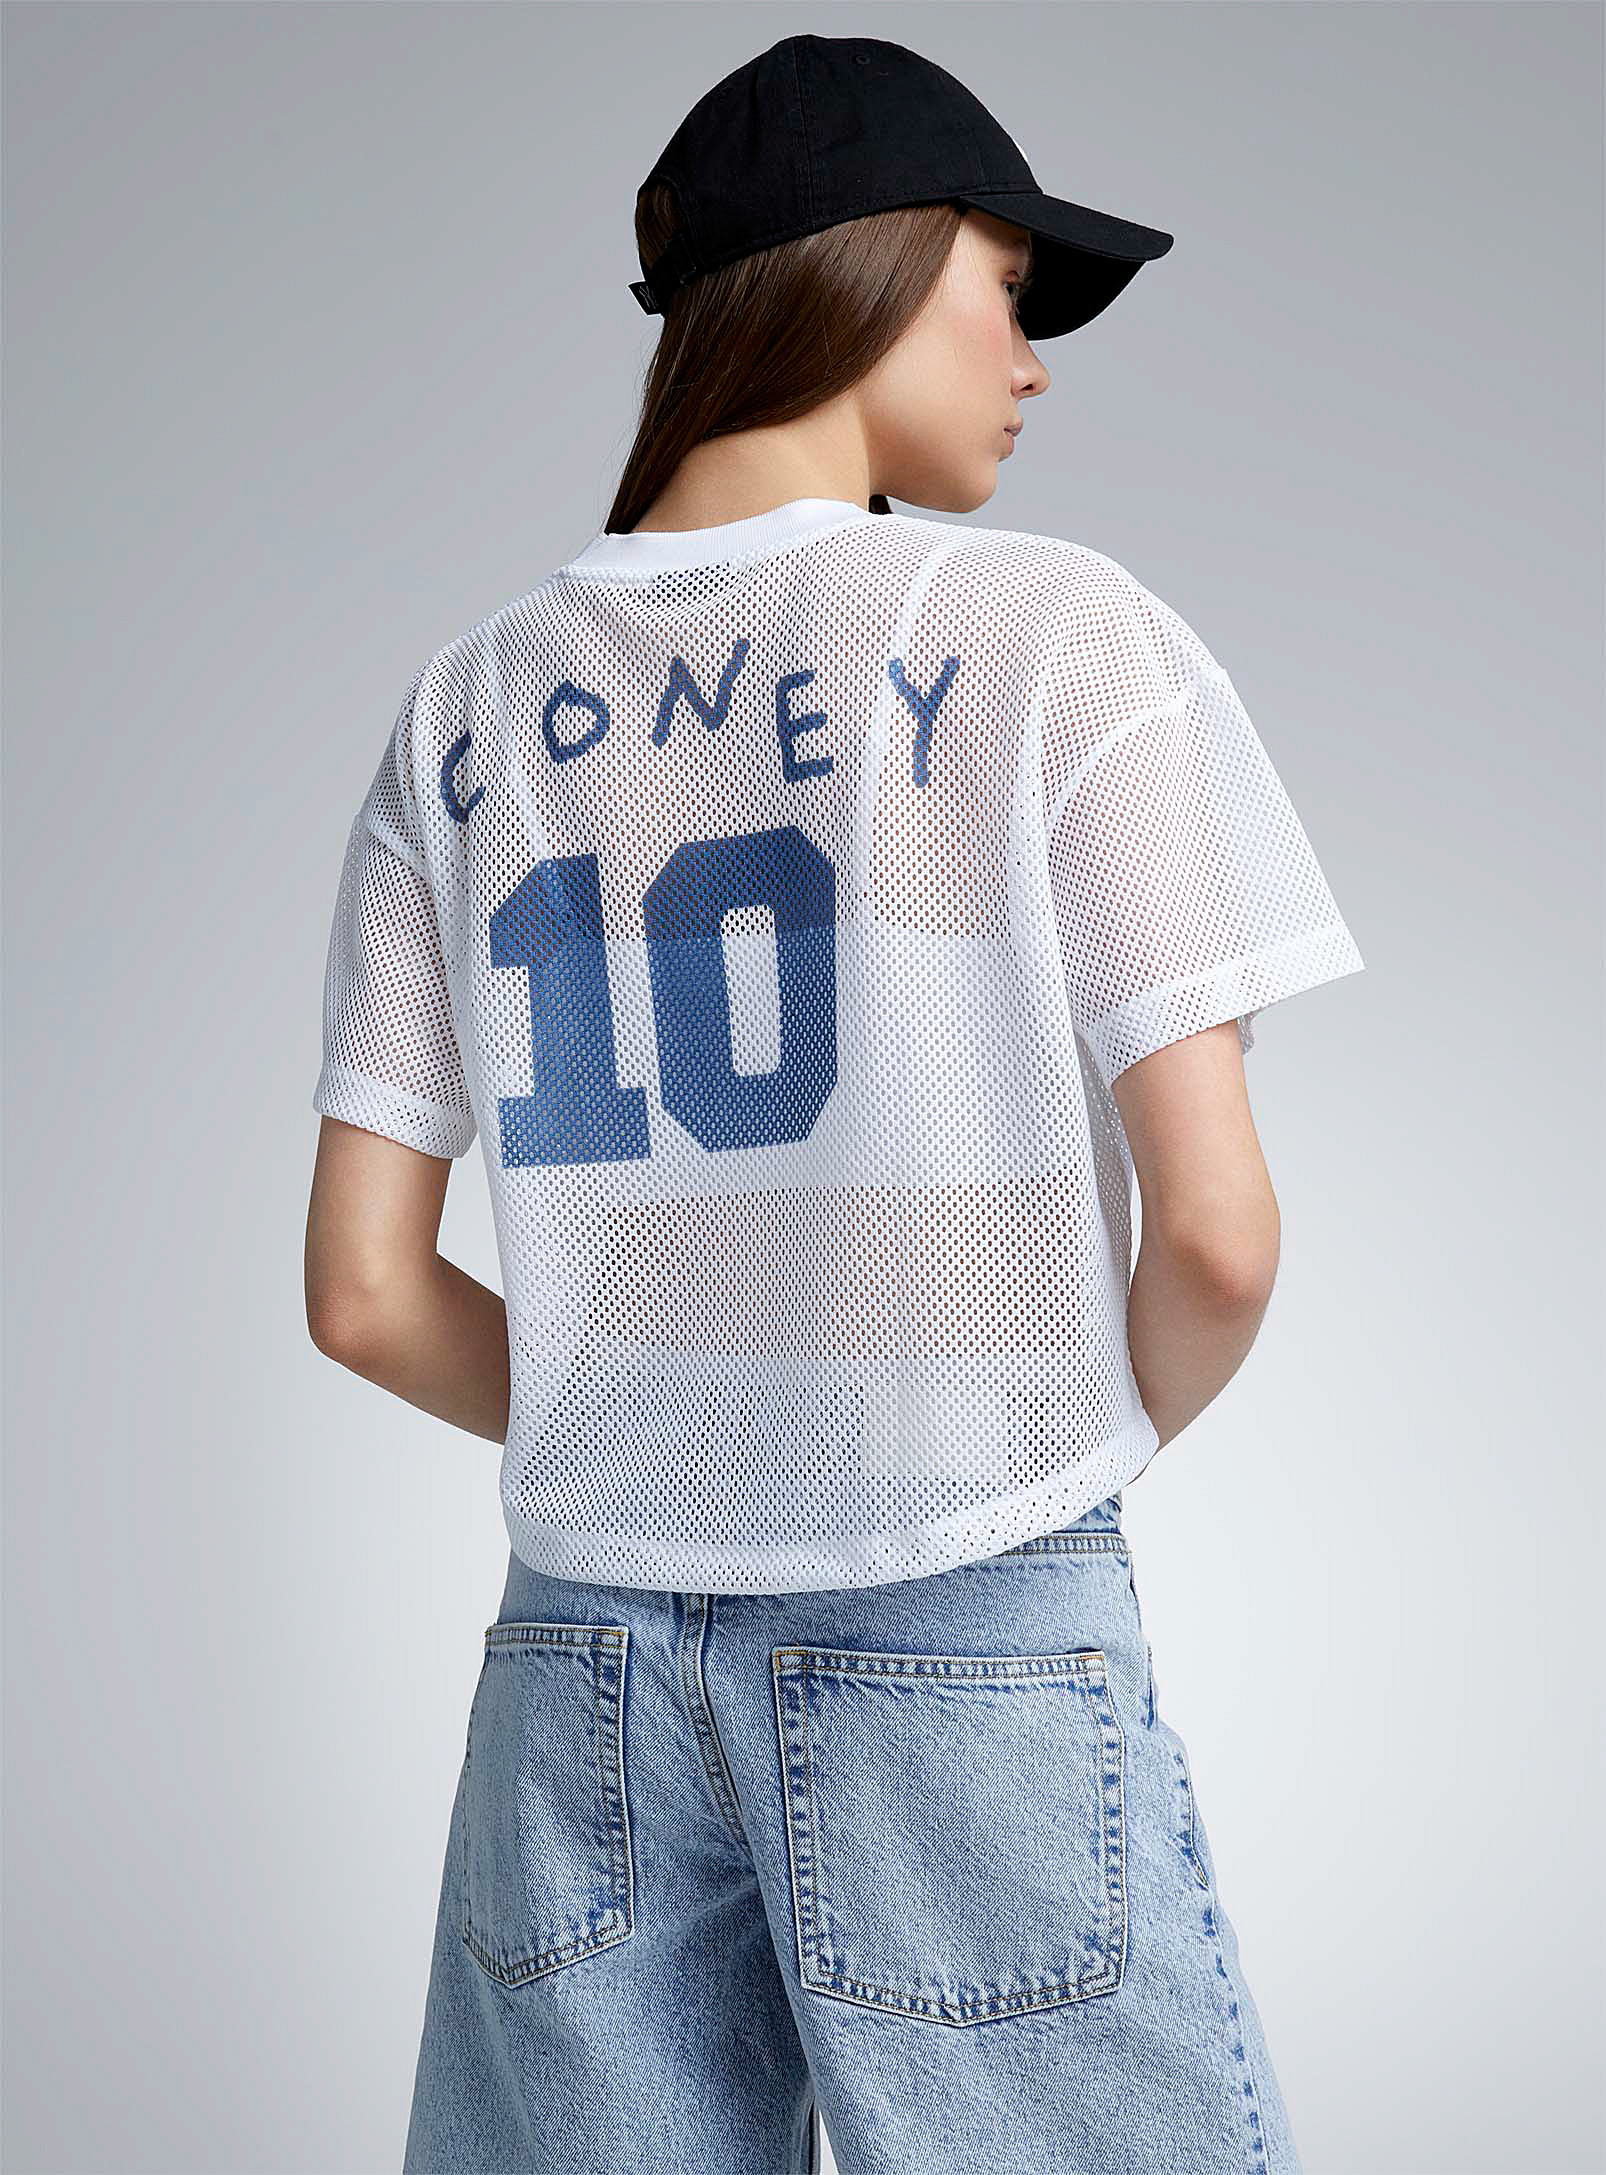 Coney Island Picnic - Le t-shirt football filet numéro 10